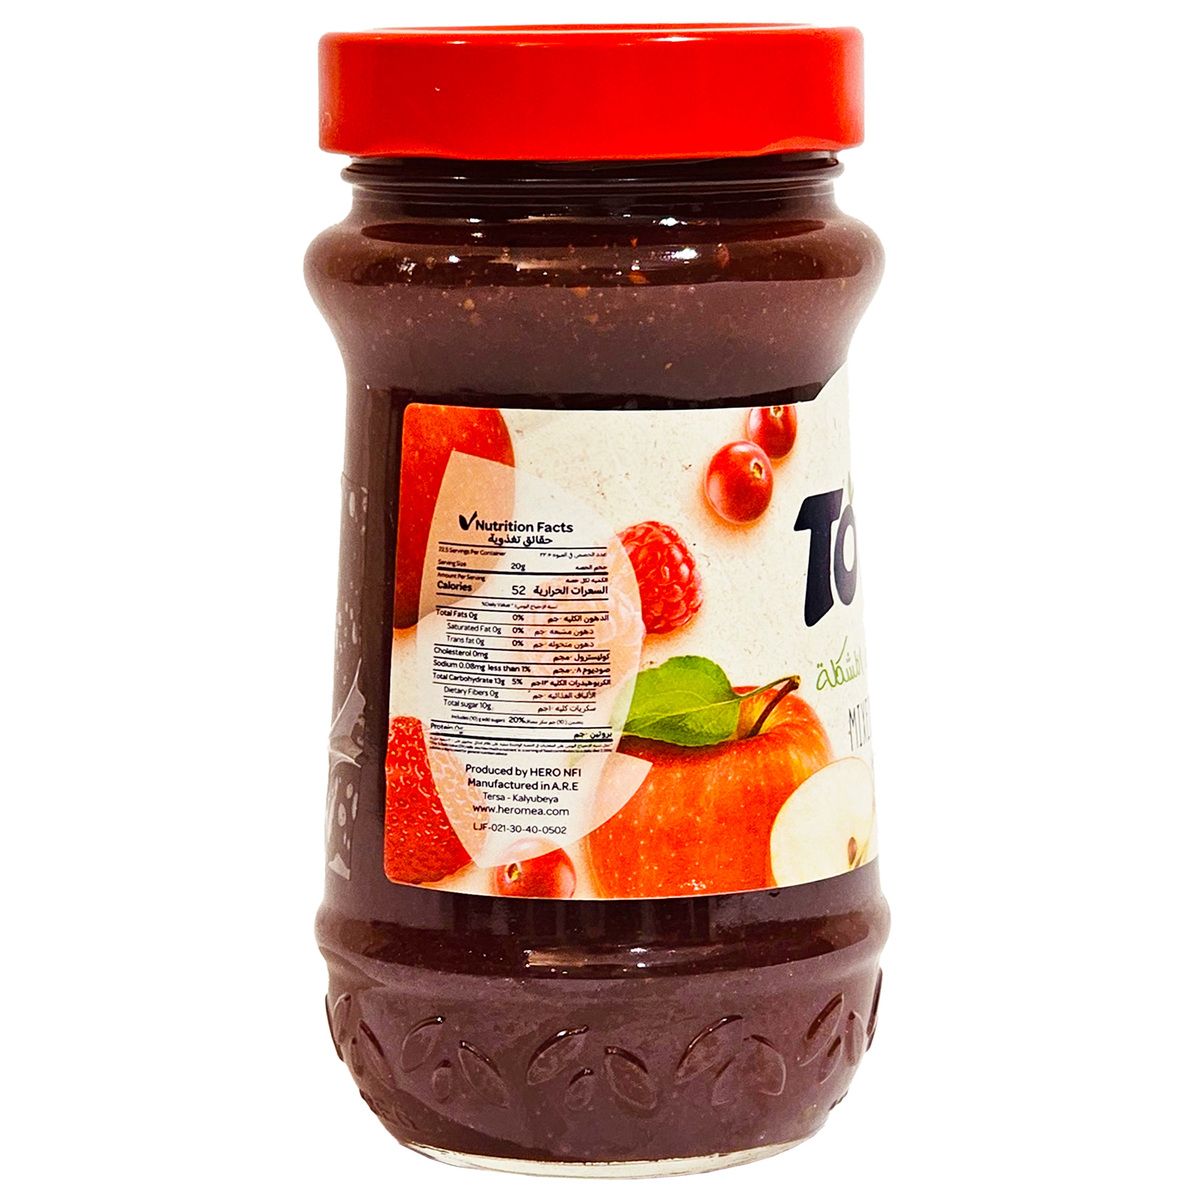 Tova Mixed Fruit Jam Value Pack 2 x 450 g